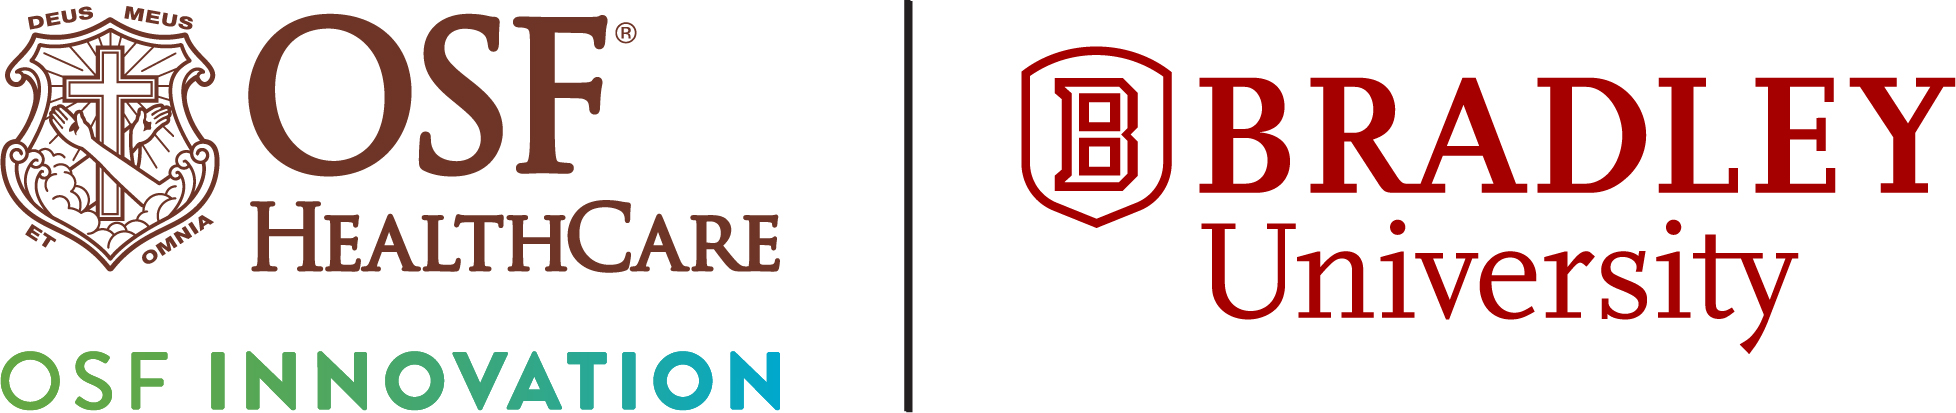 OSF HealthCare and Bradley University Logos